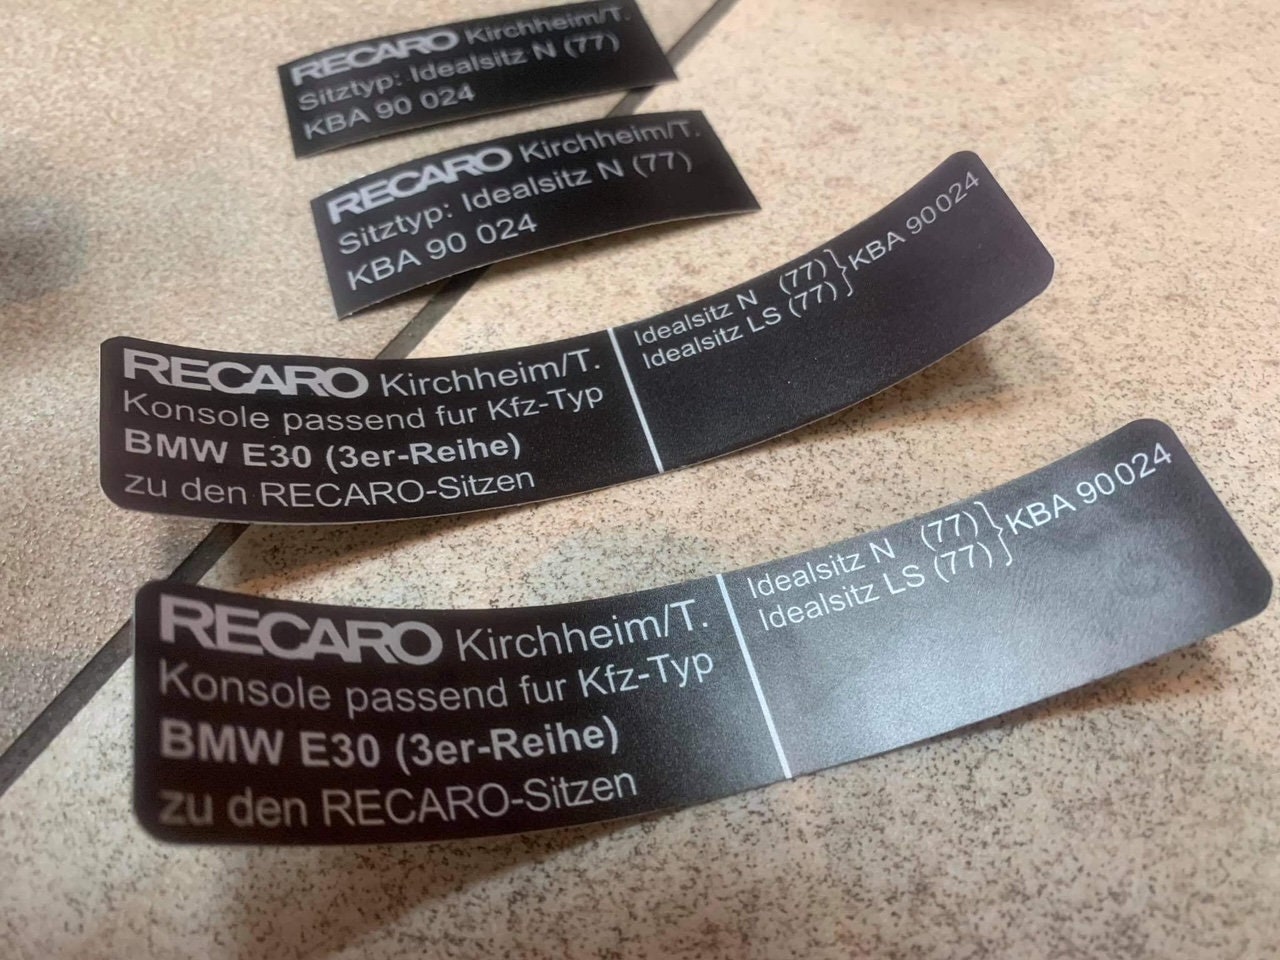 4pcs Stickers for BMW E30 Recaro Seats and Consoles -  Finland